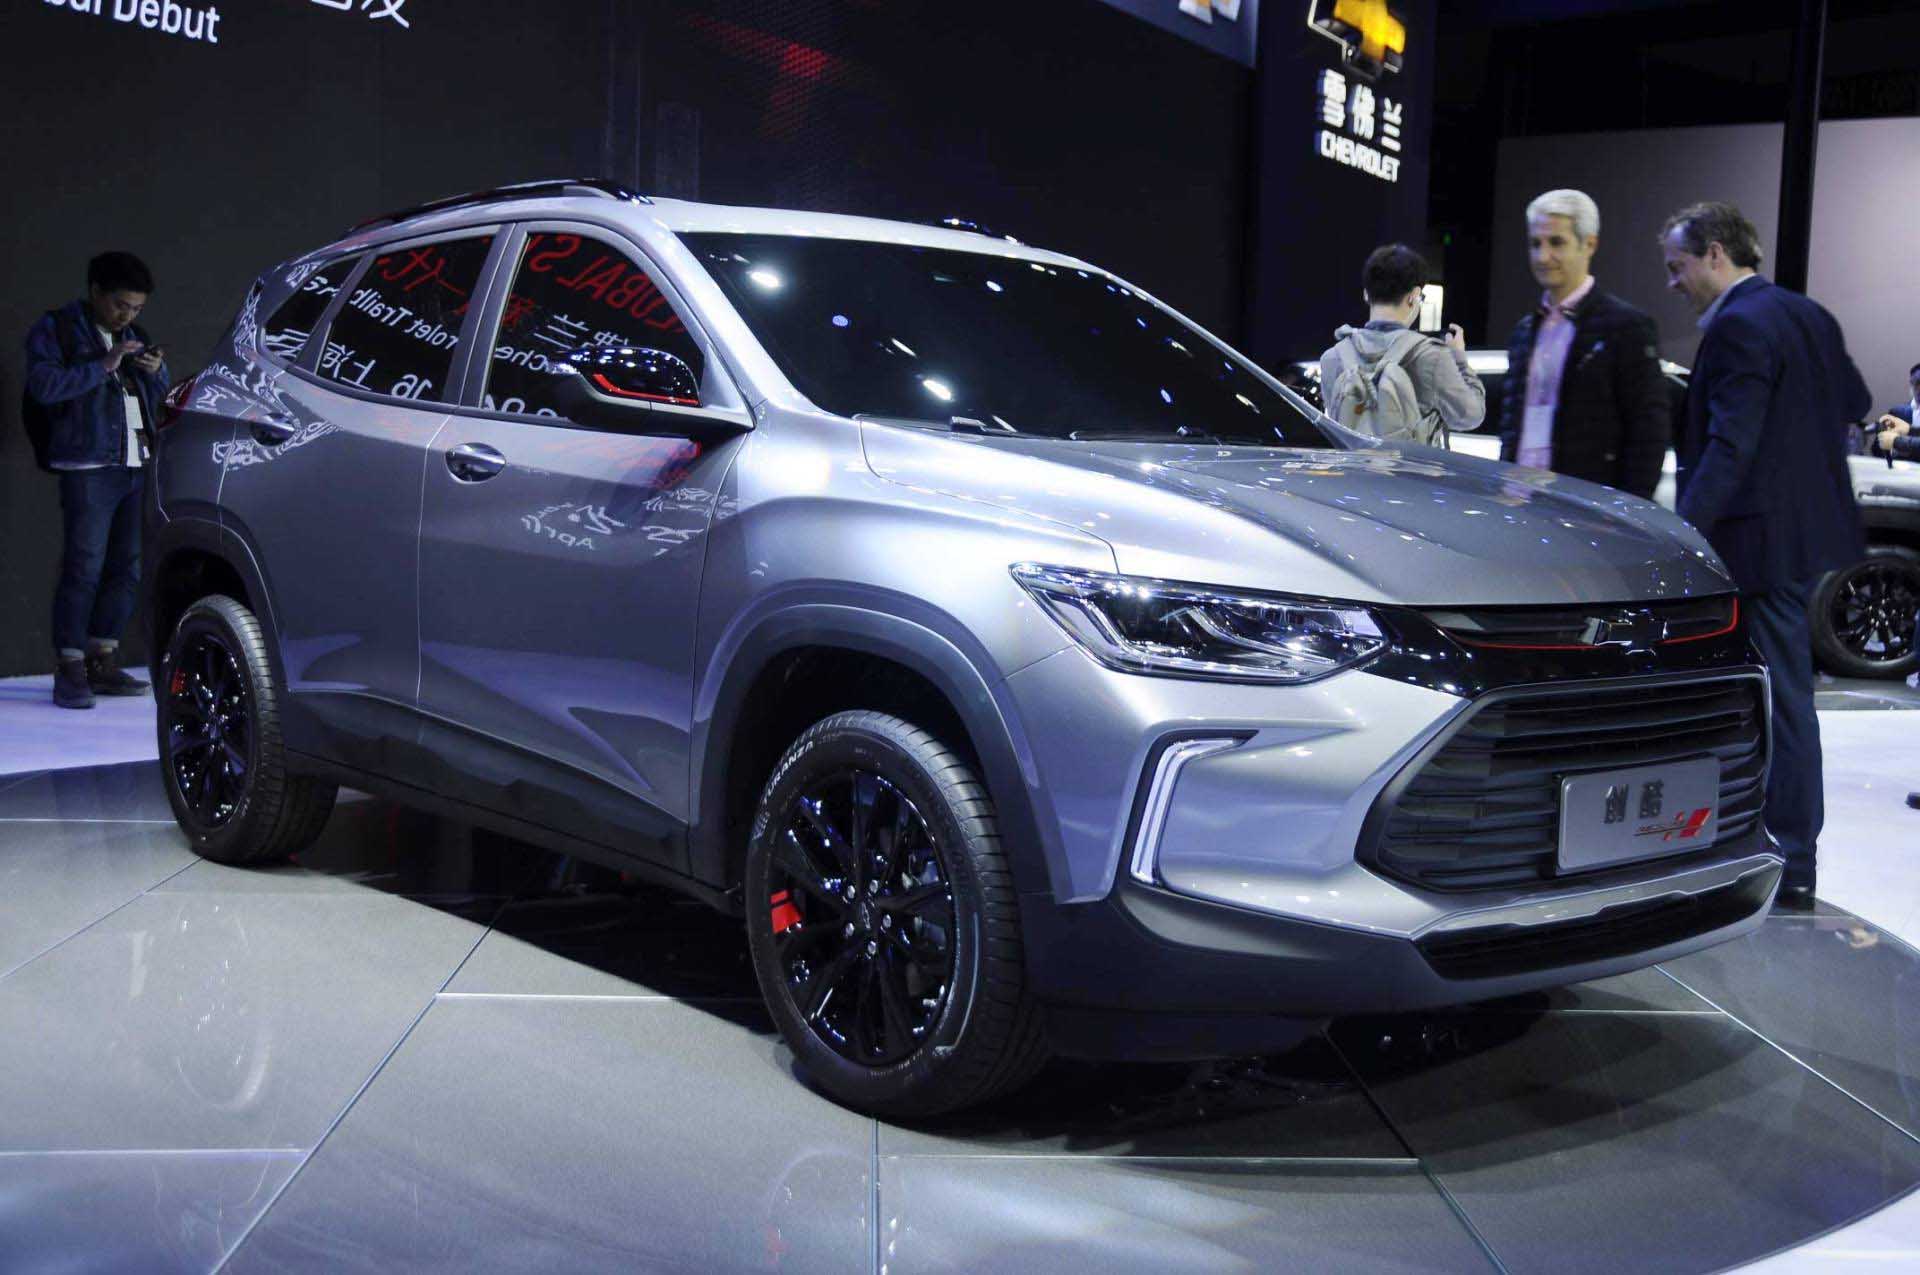 Berita, All New Chevolet Tracker China: All New Chevrolet Tracker China : Akankah Jadi Suksesor Trax?